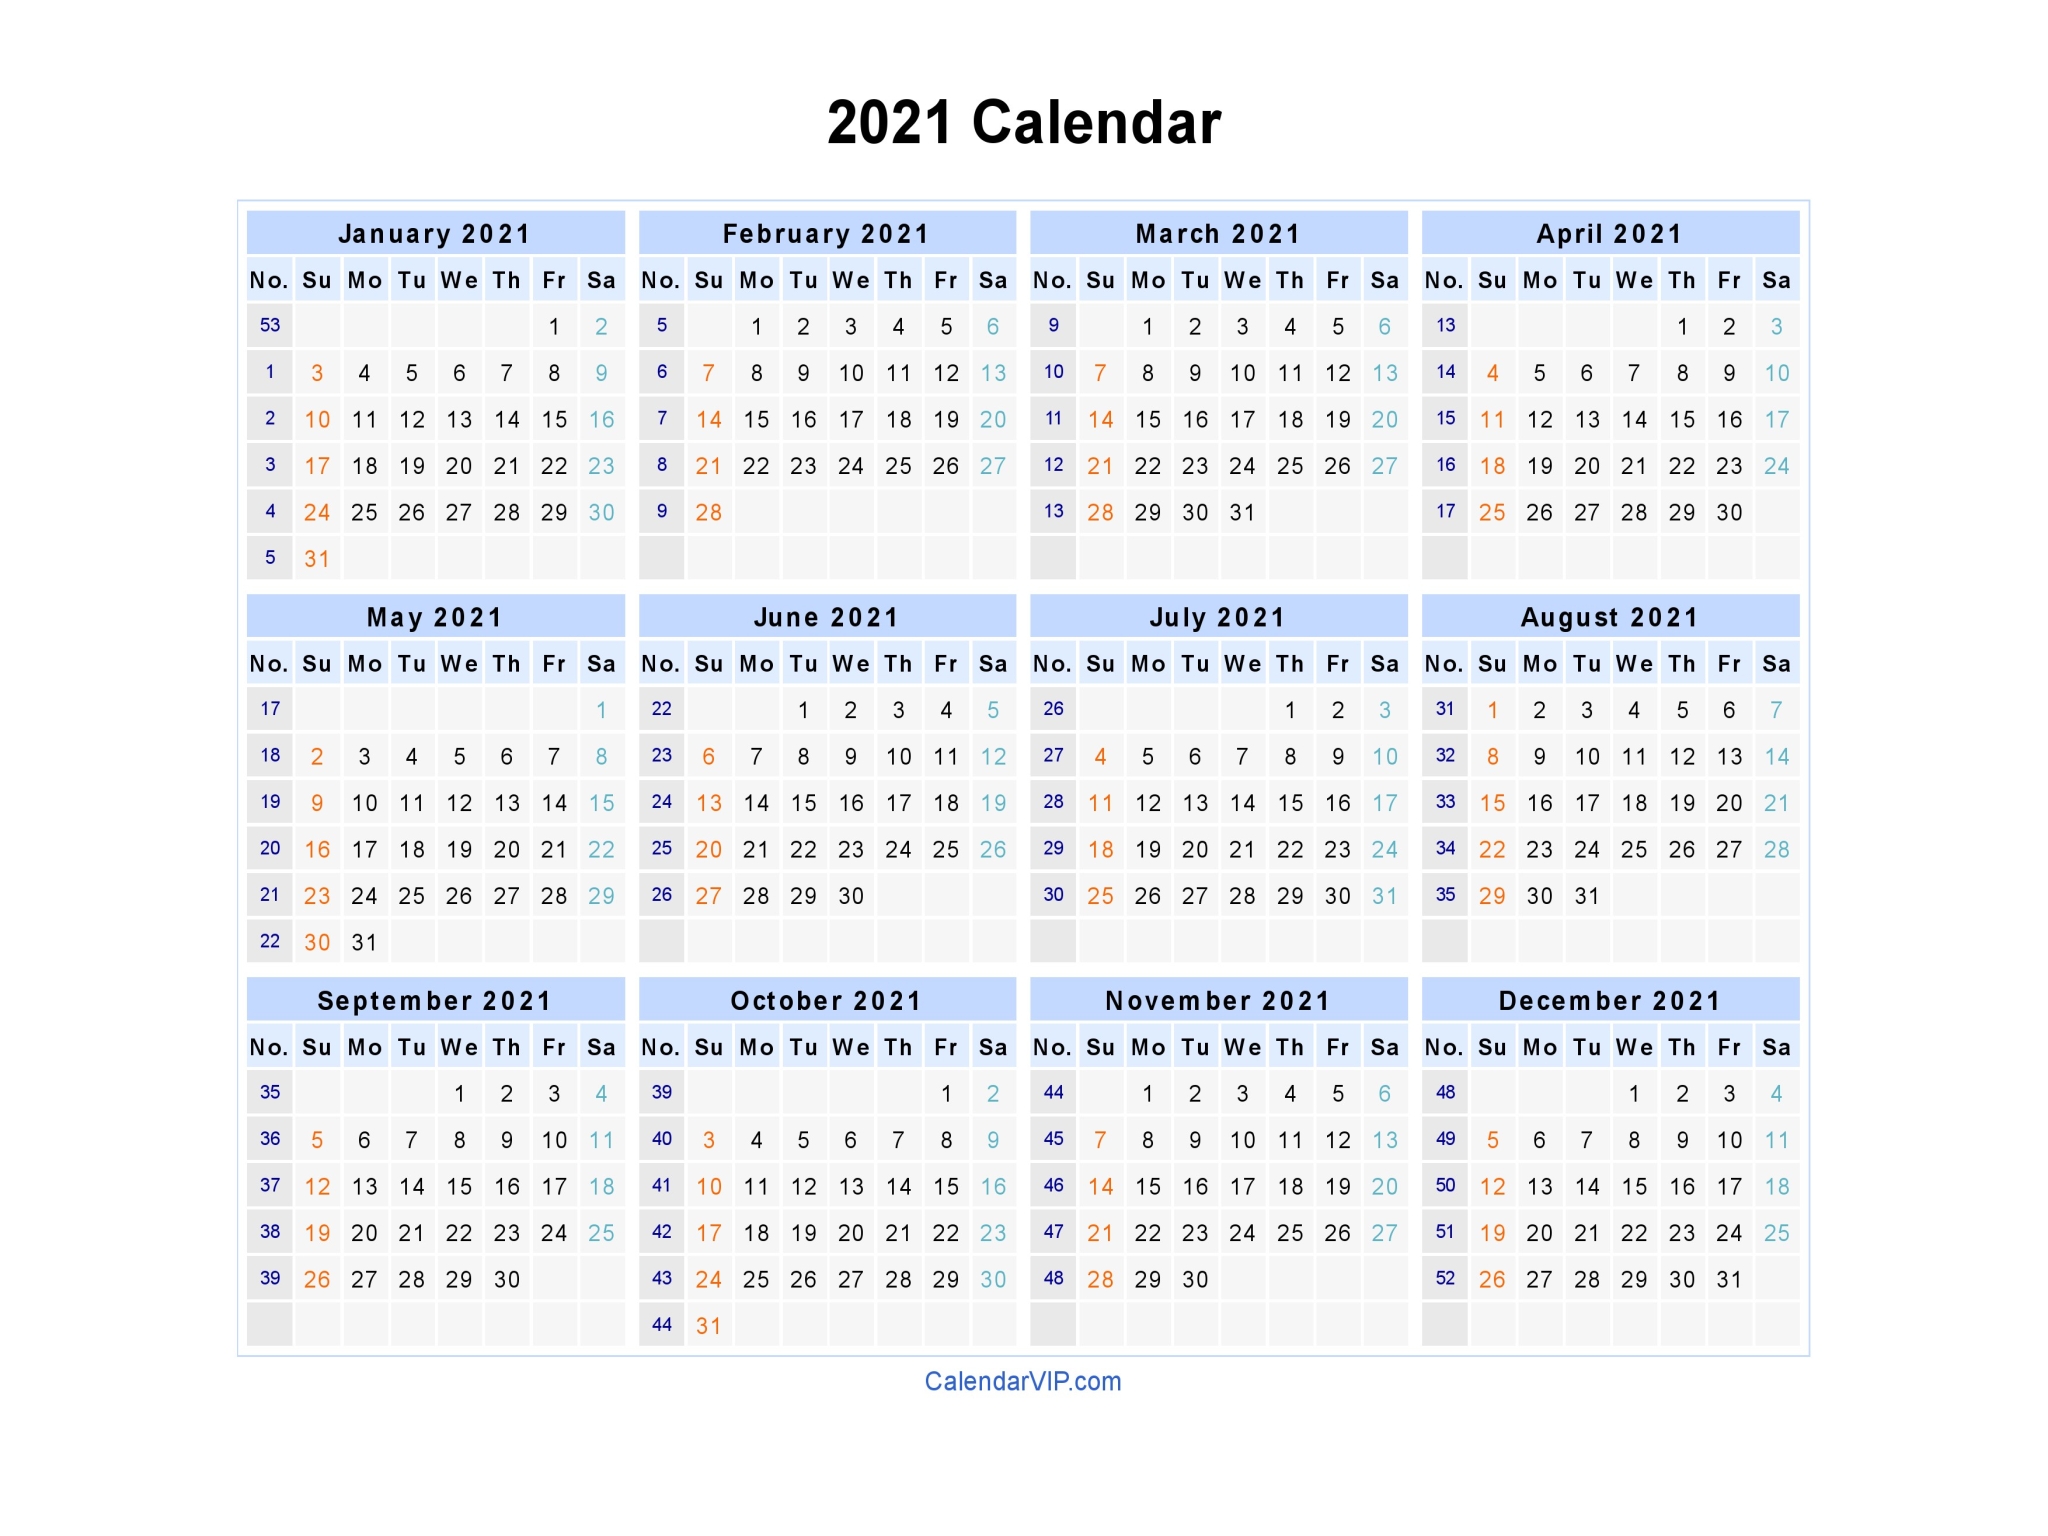 2021 Calendar - Blank Printable Calendar Template in PDF ...